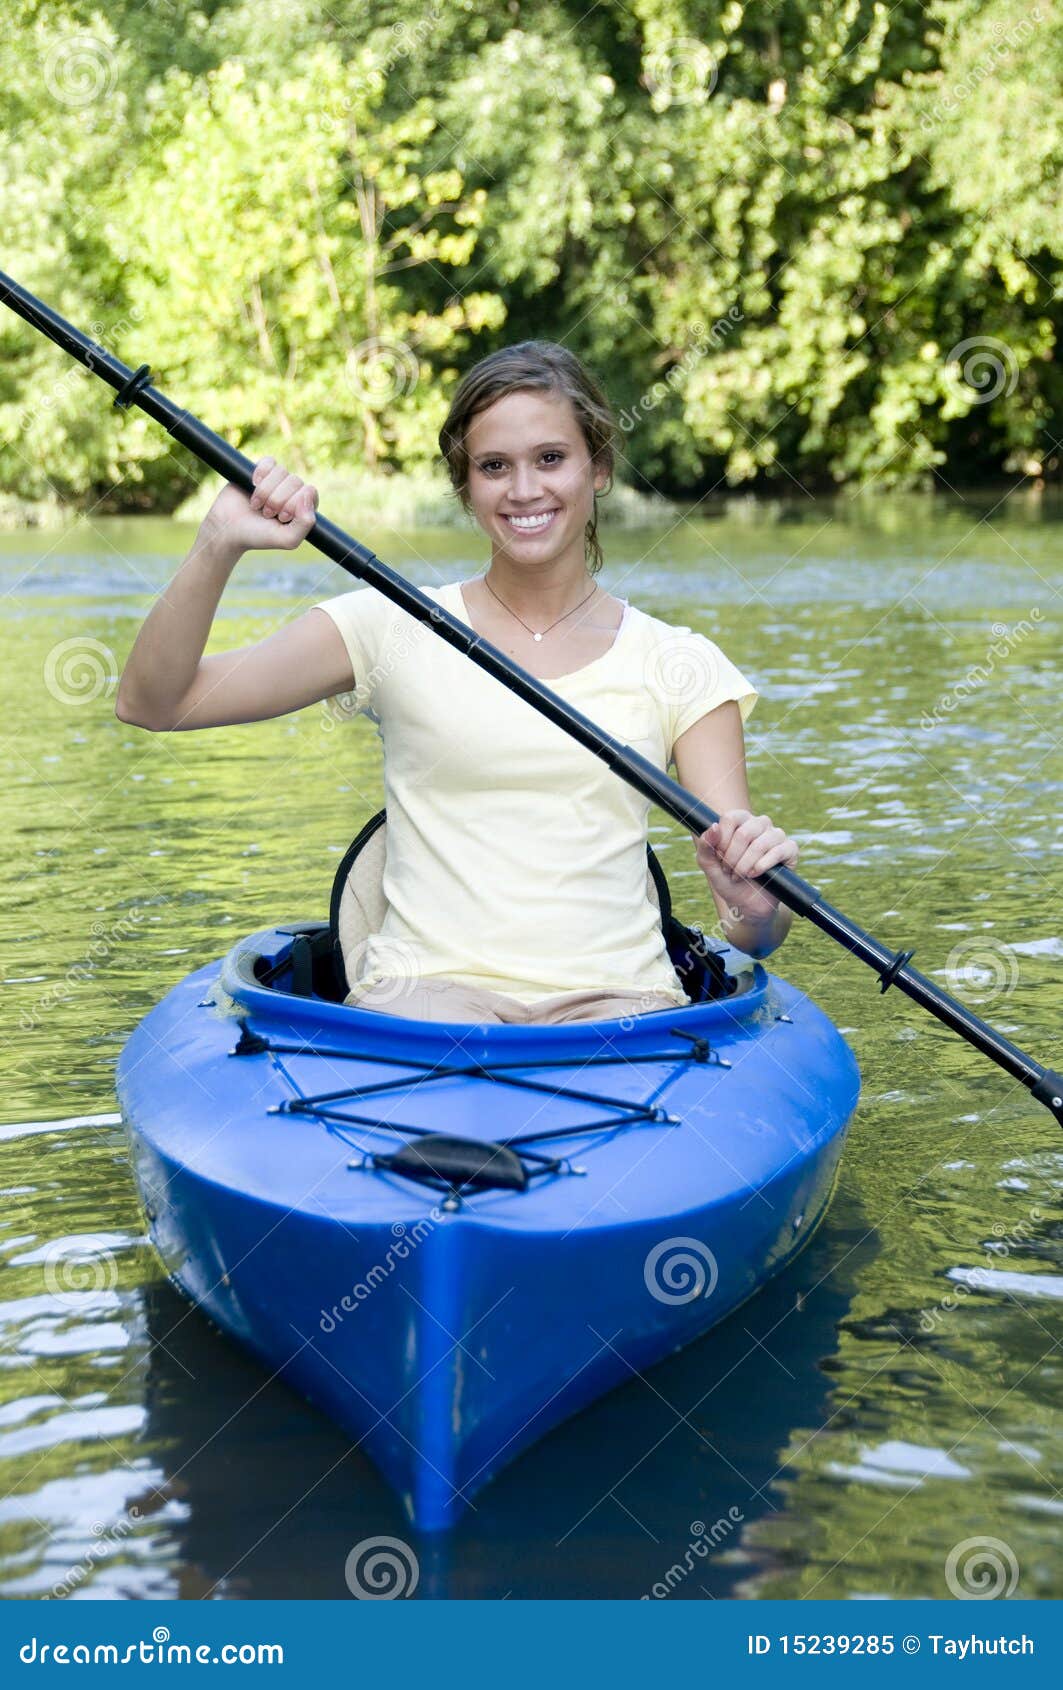 female kayak clipart - photo #44